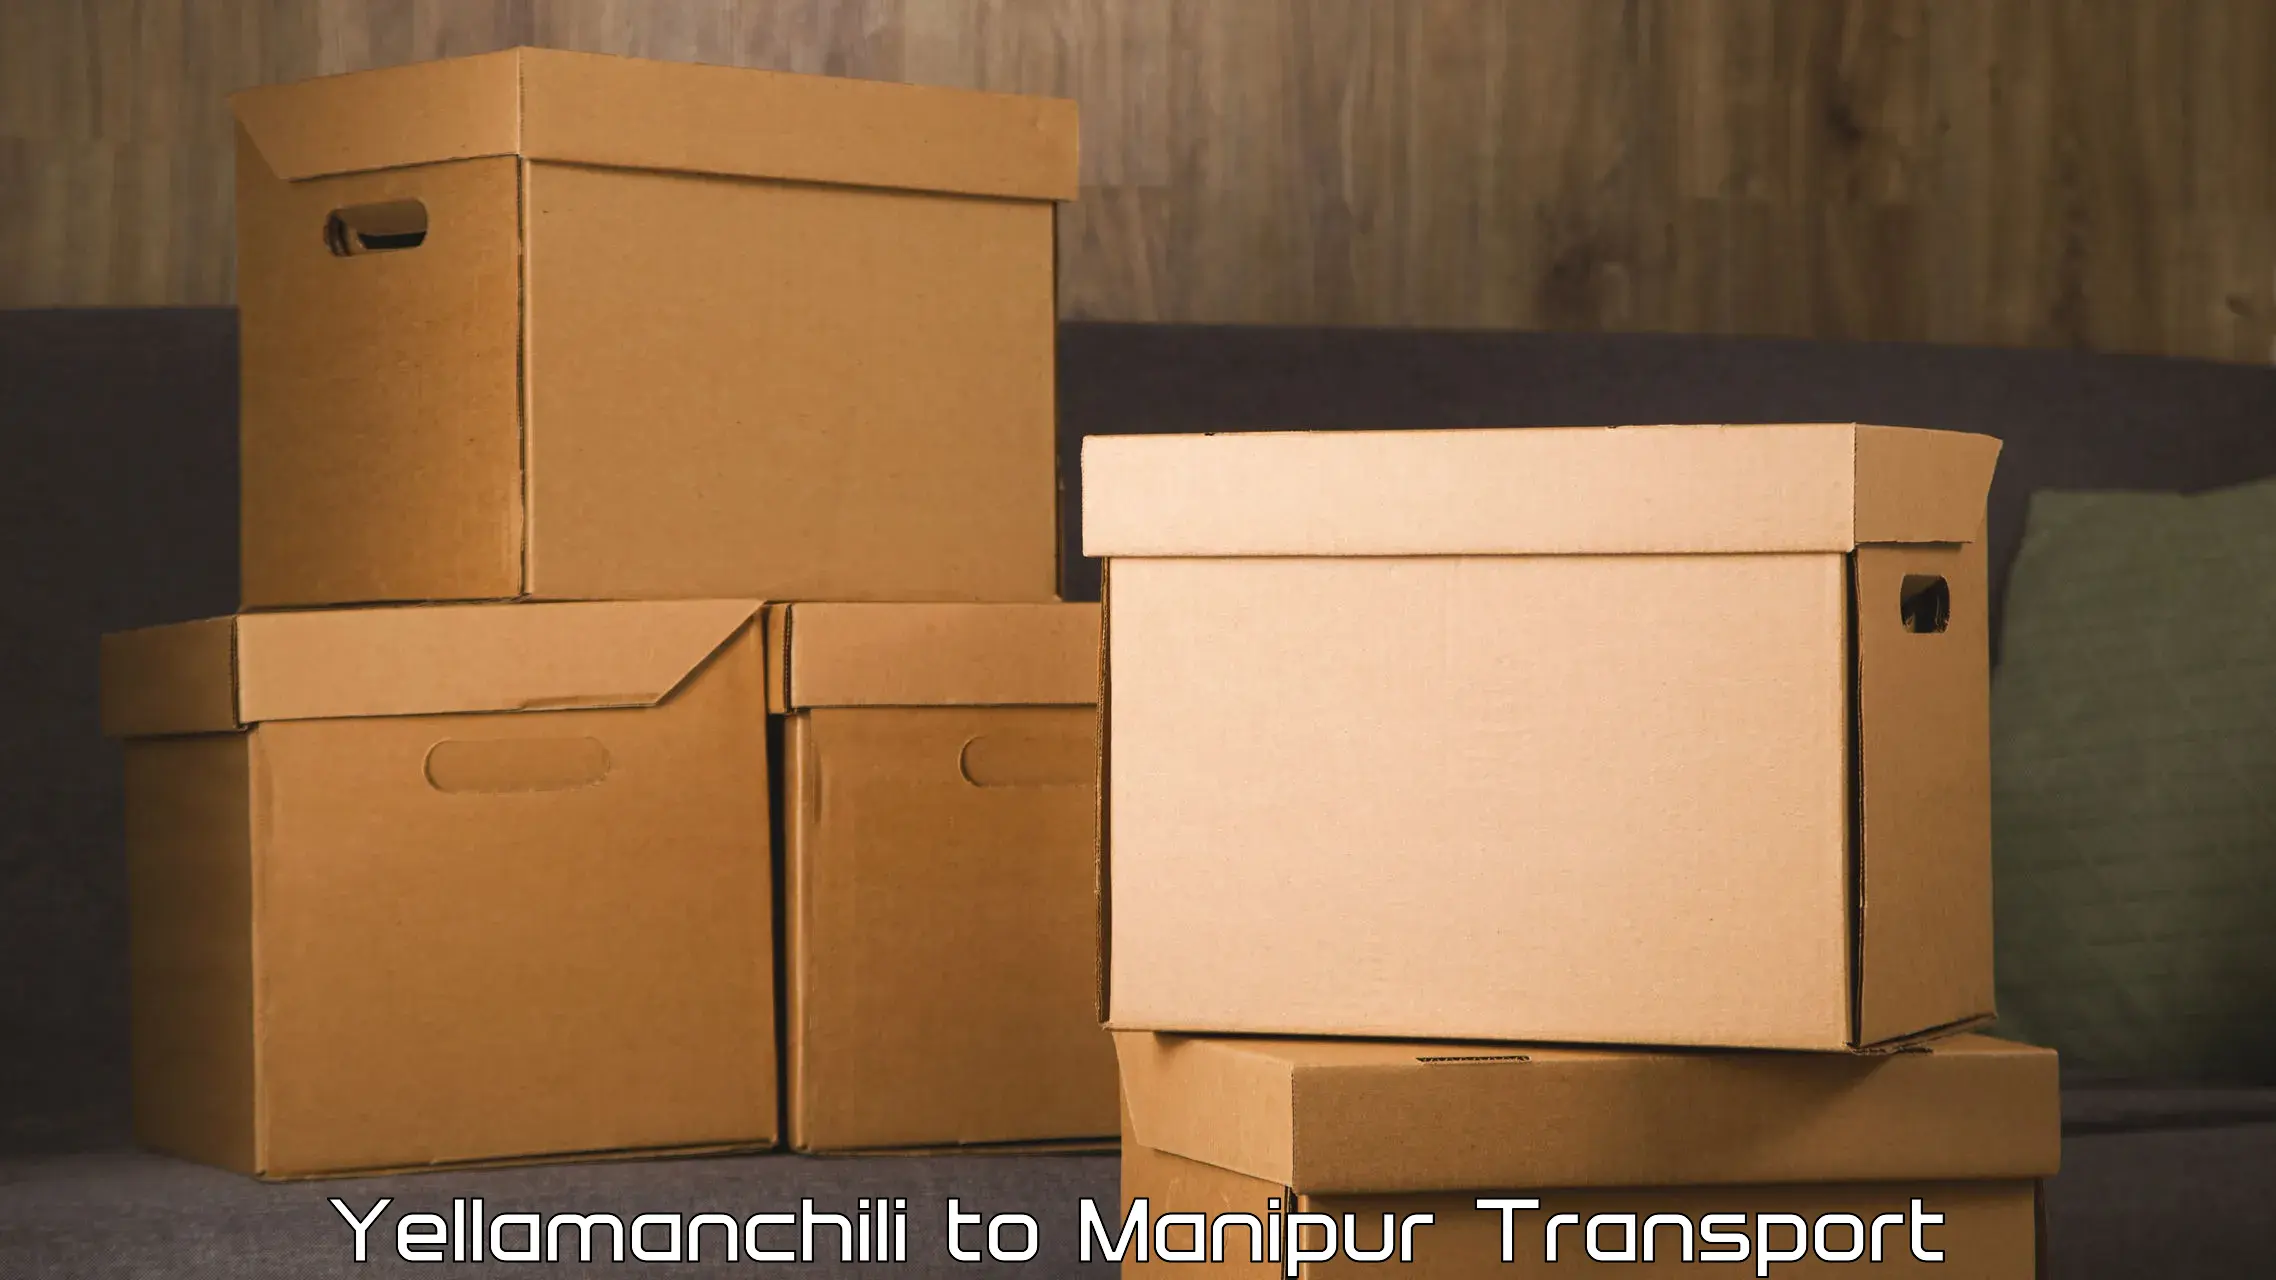 Package delivery services Yellamanchili to Senapati